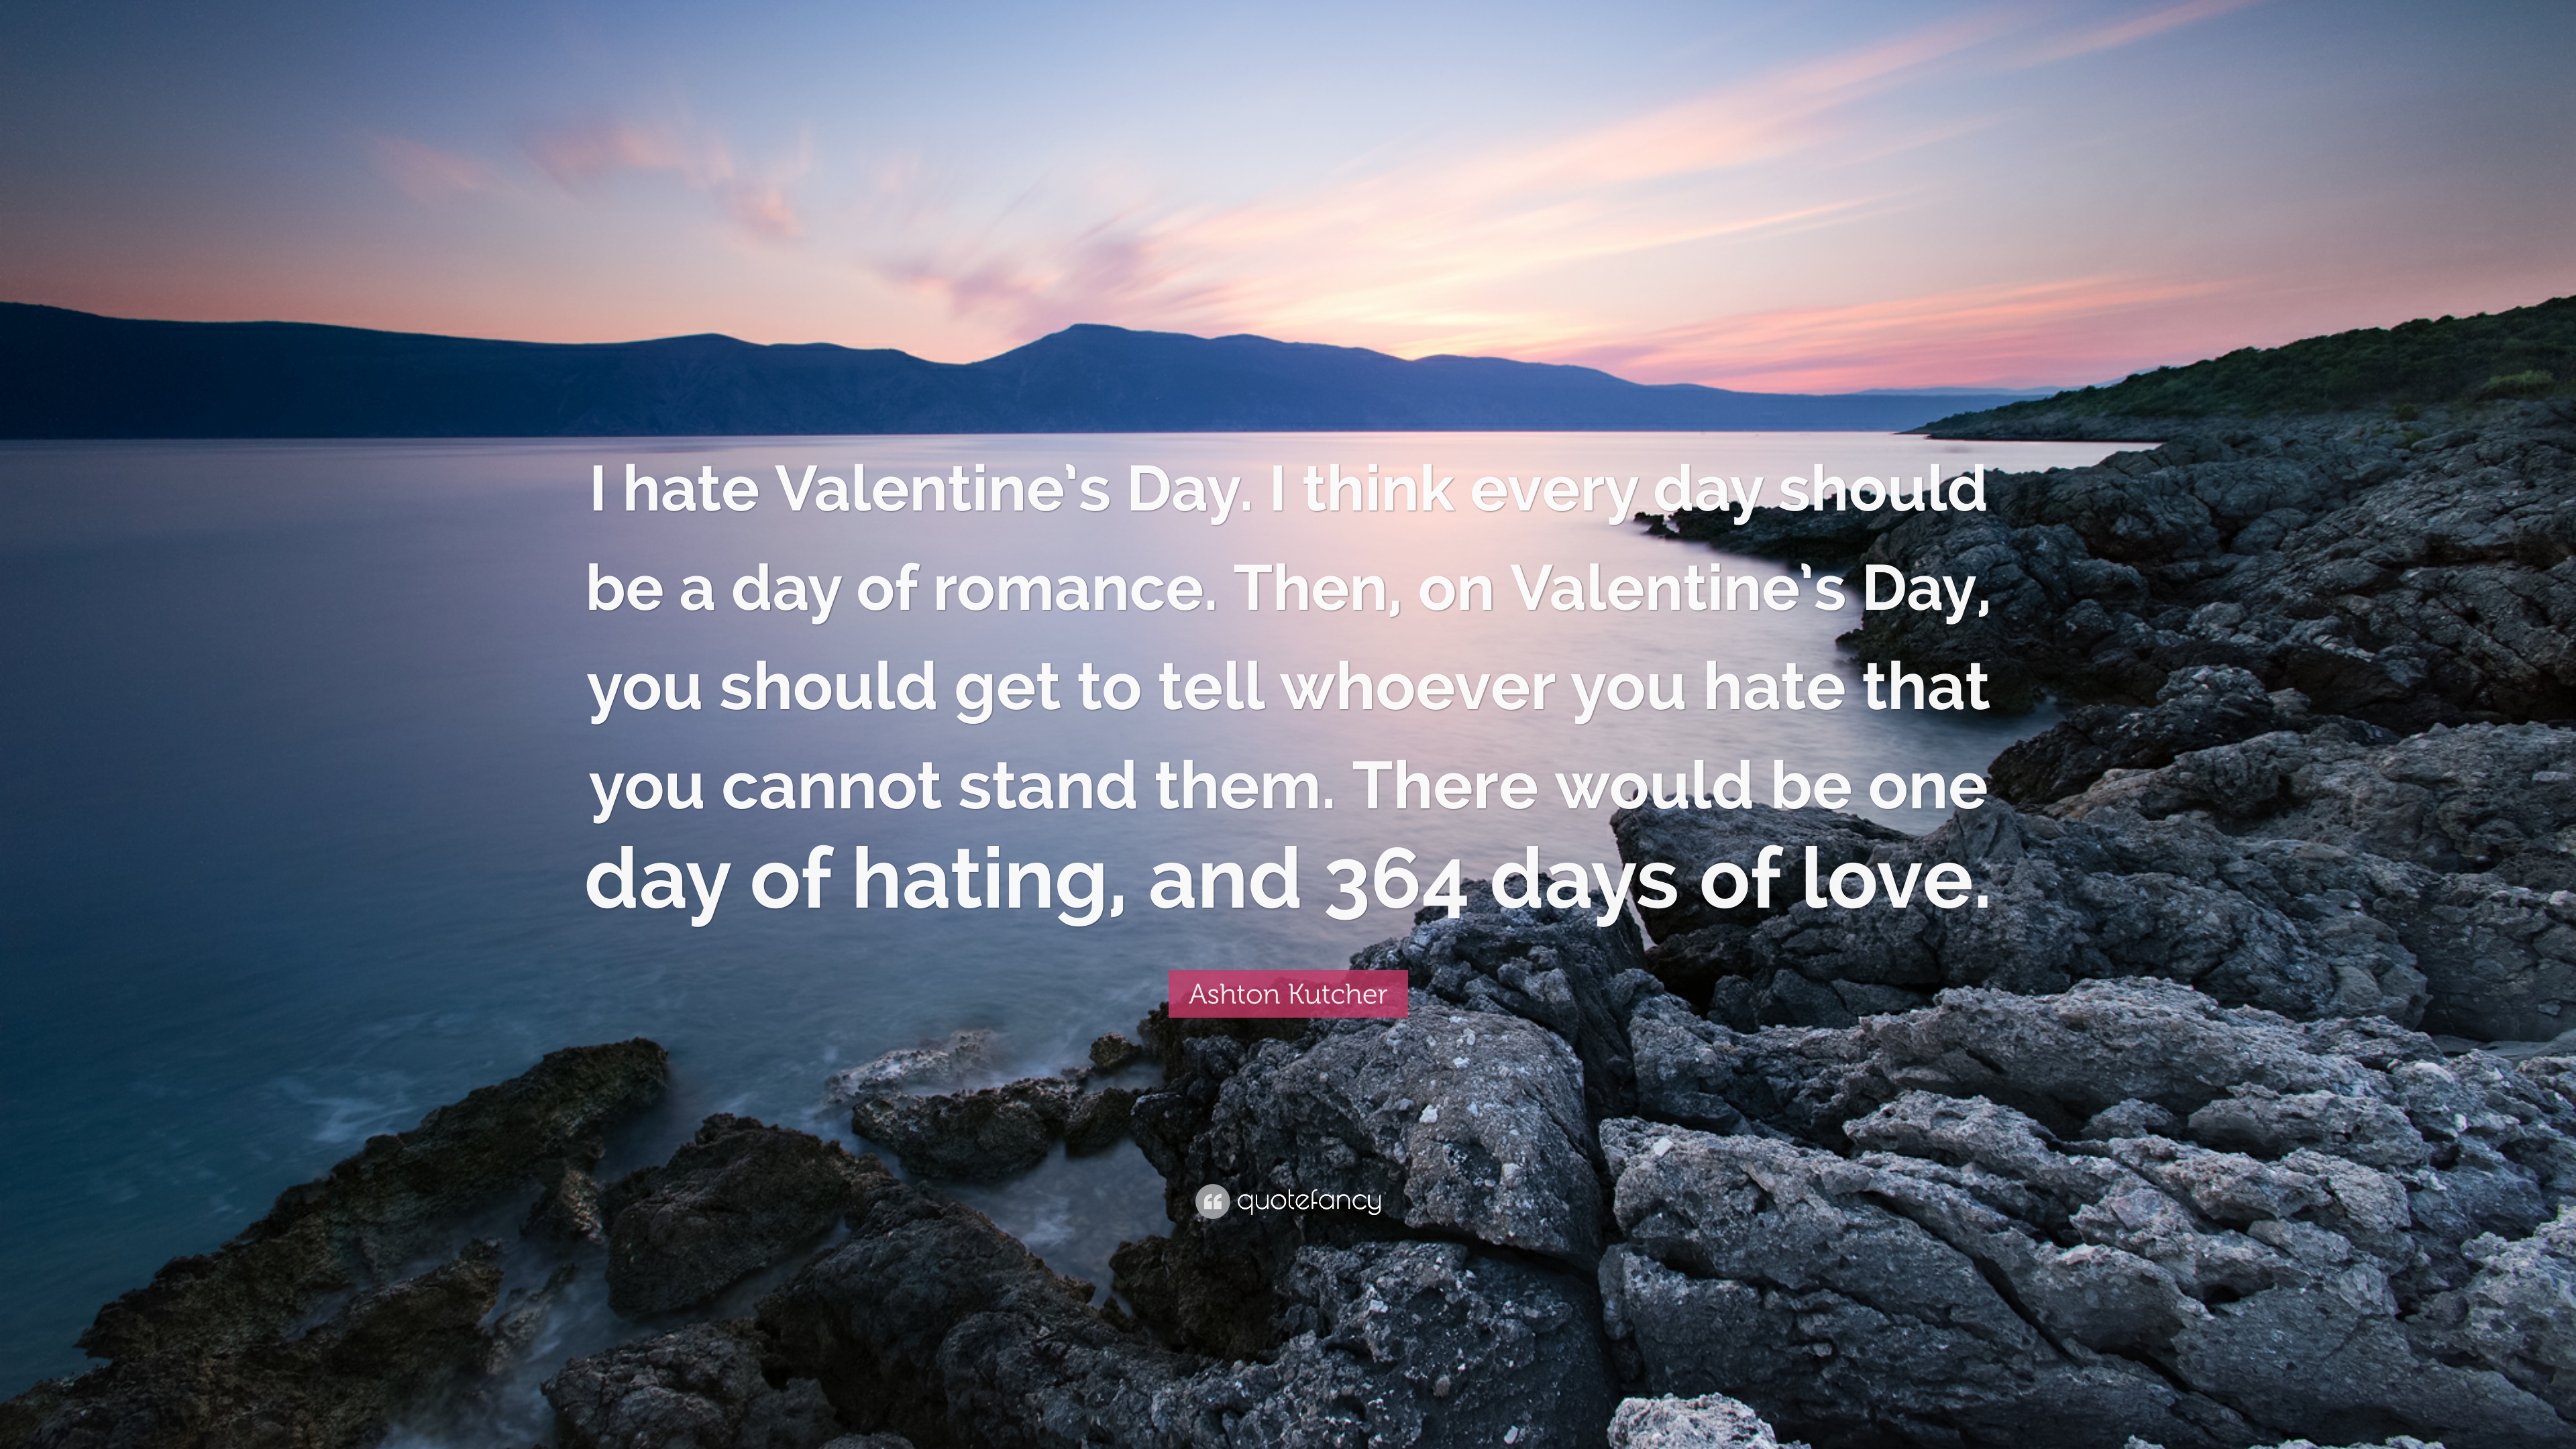 Ashton Kutcher Quote: “I hate Valentine's Day. I think every day